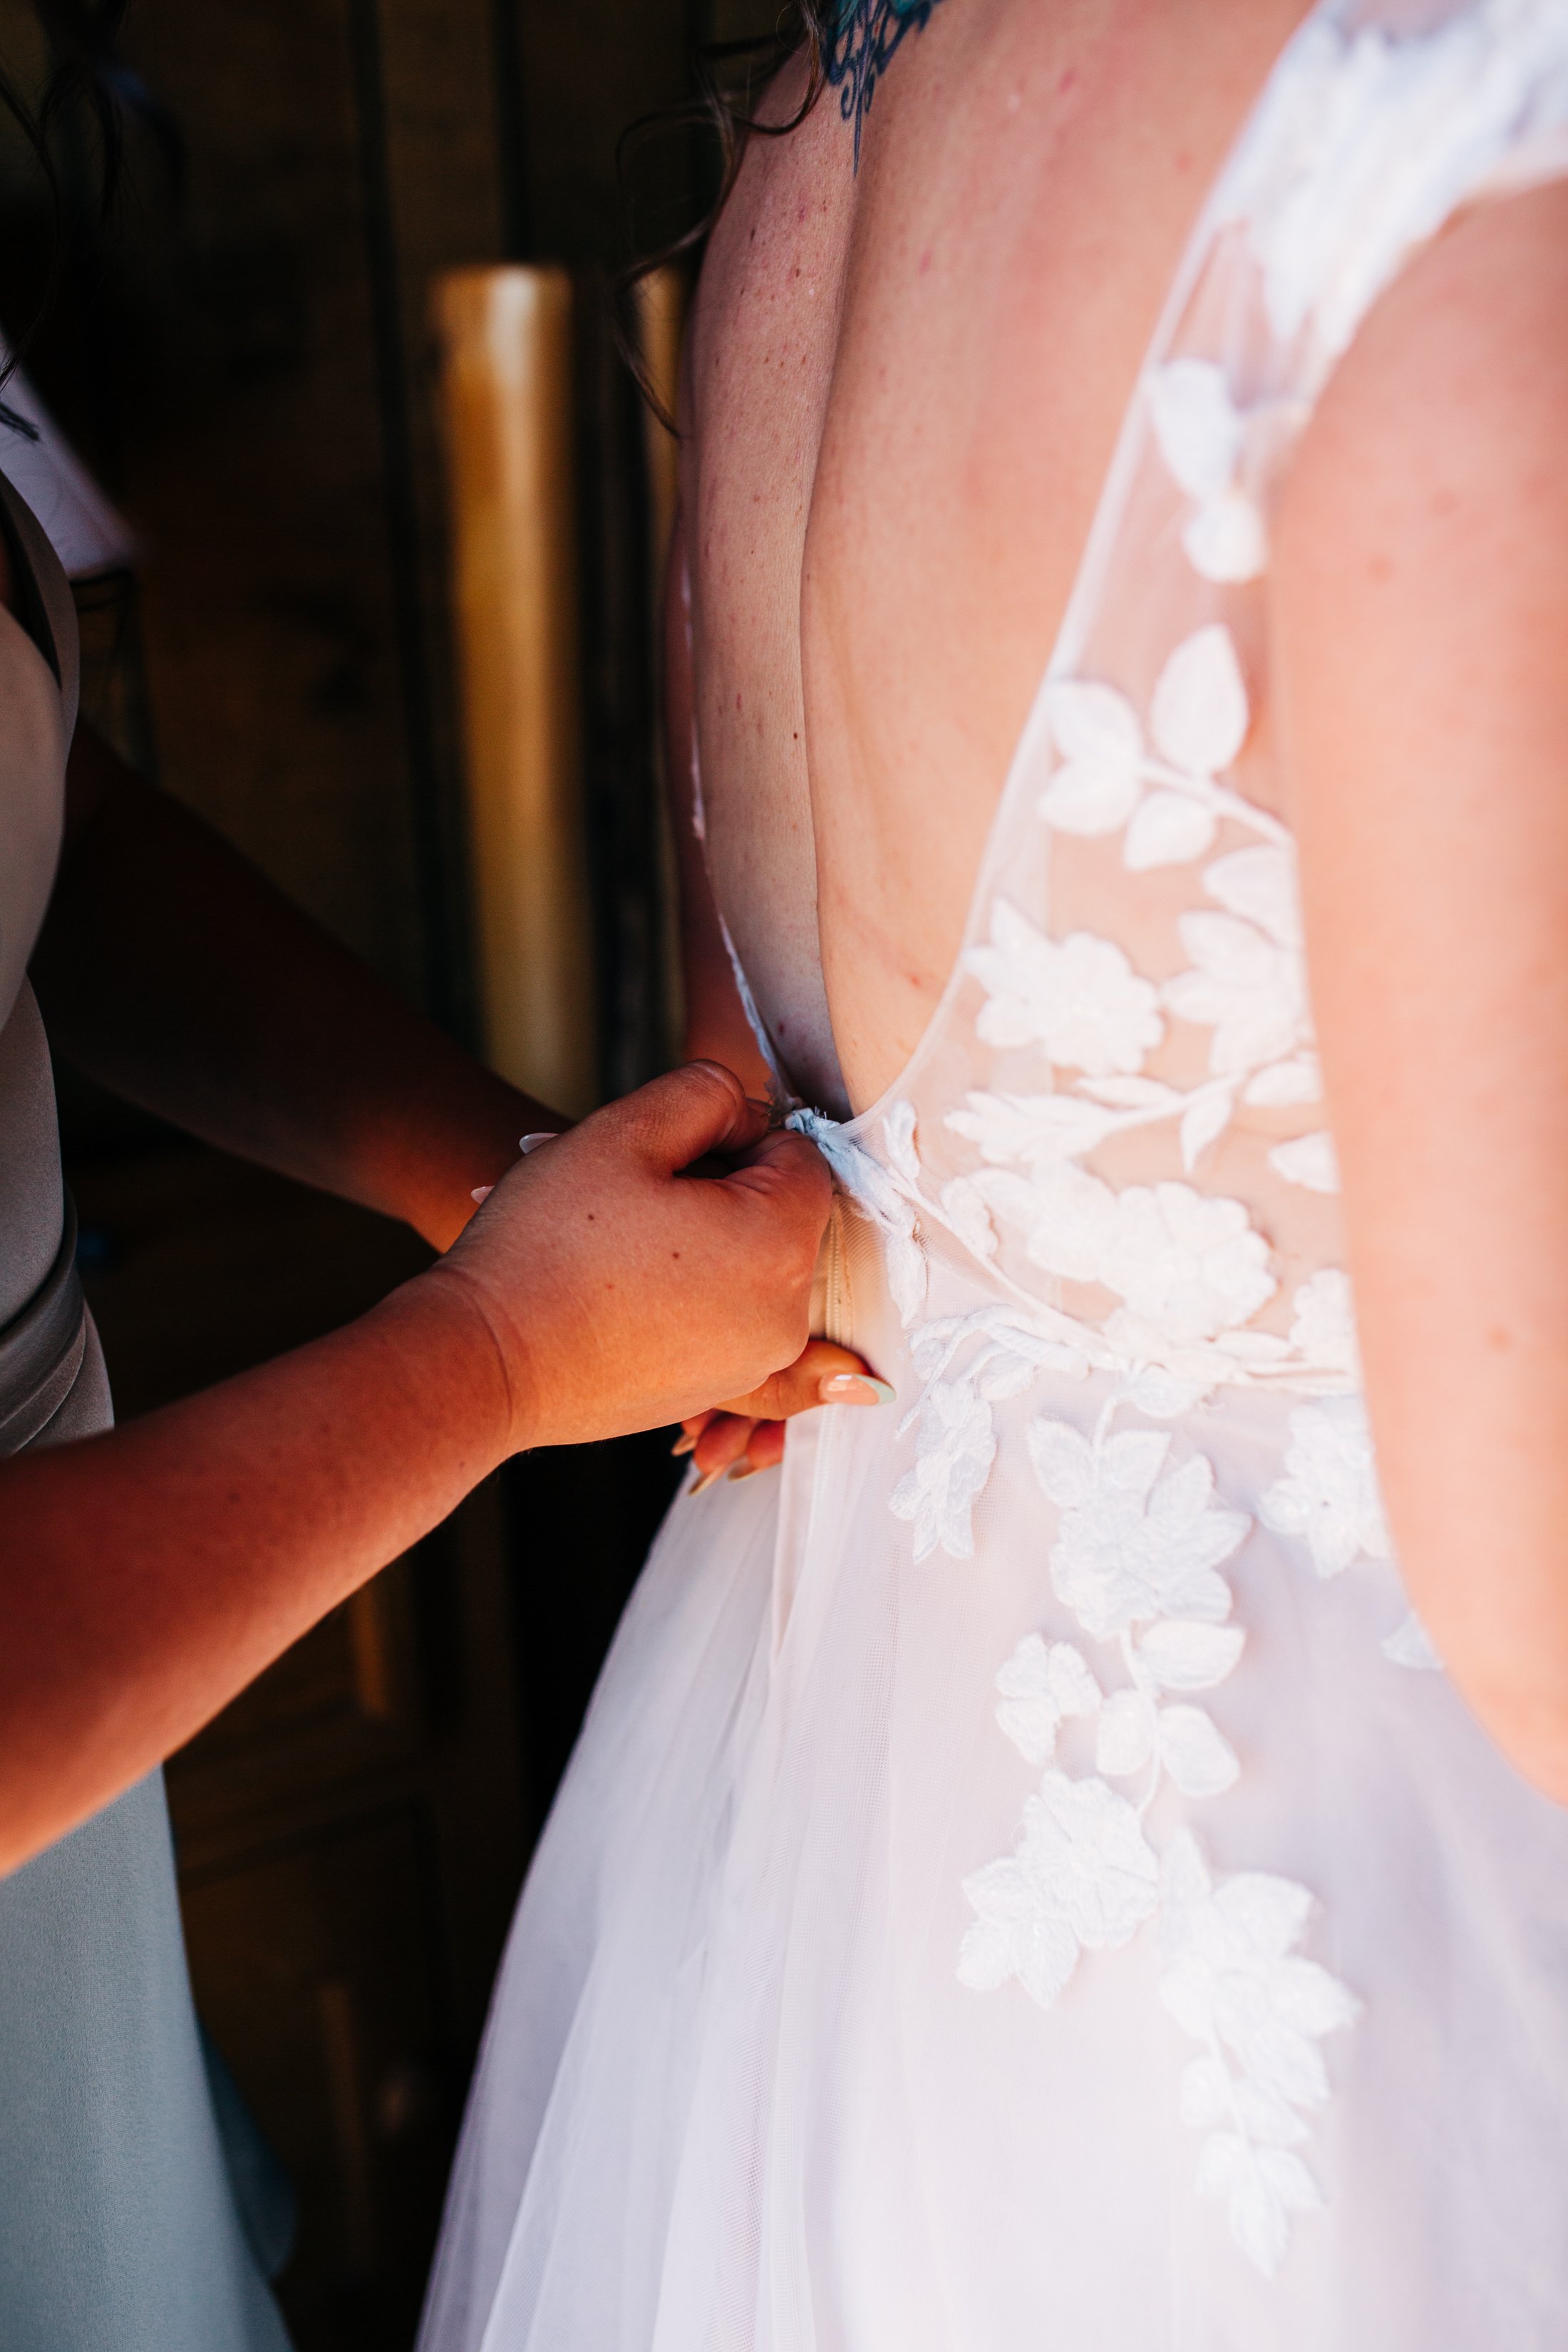 zipping brides dress.jpg